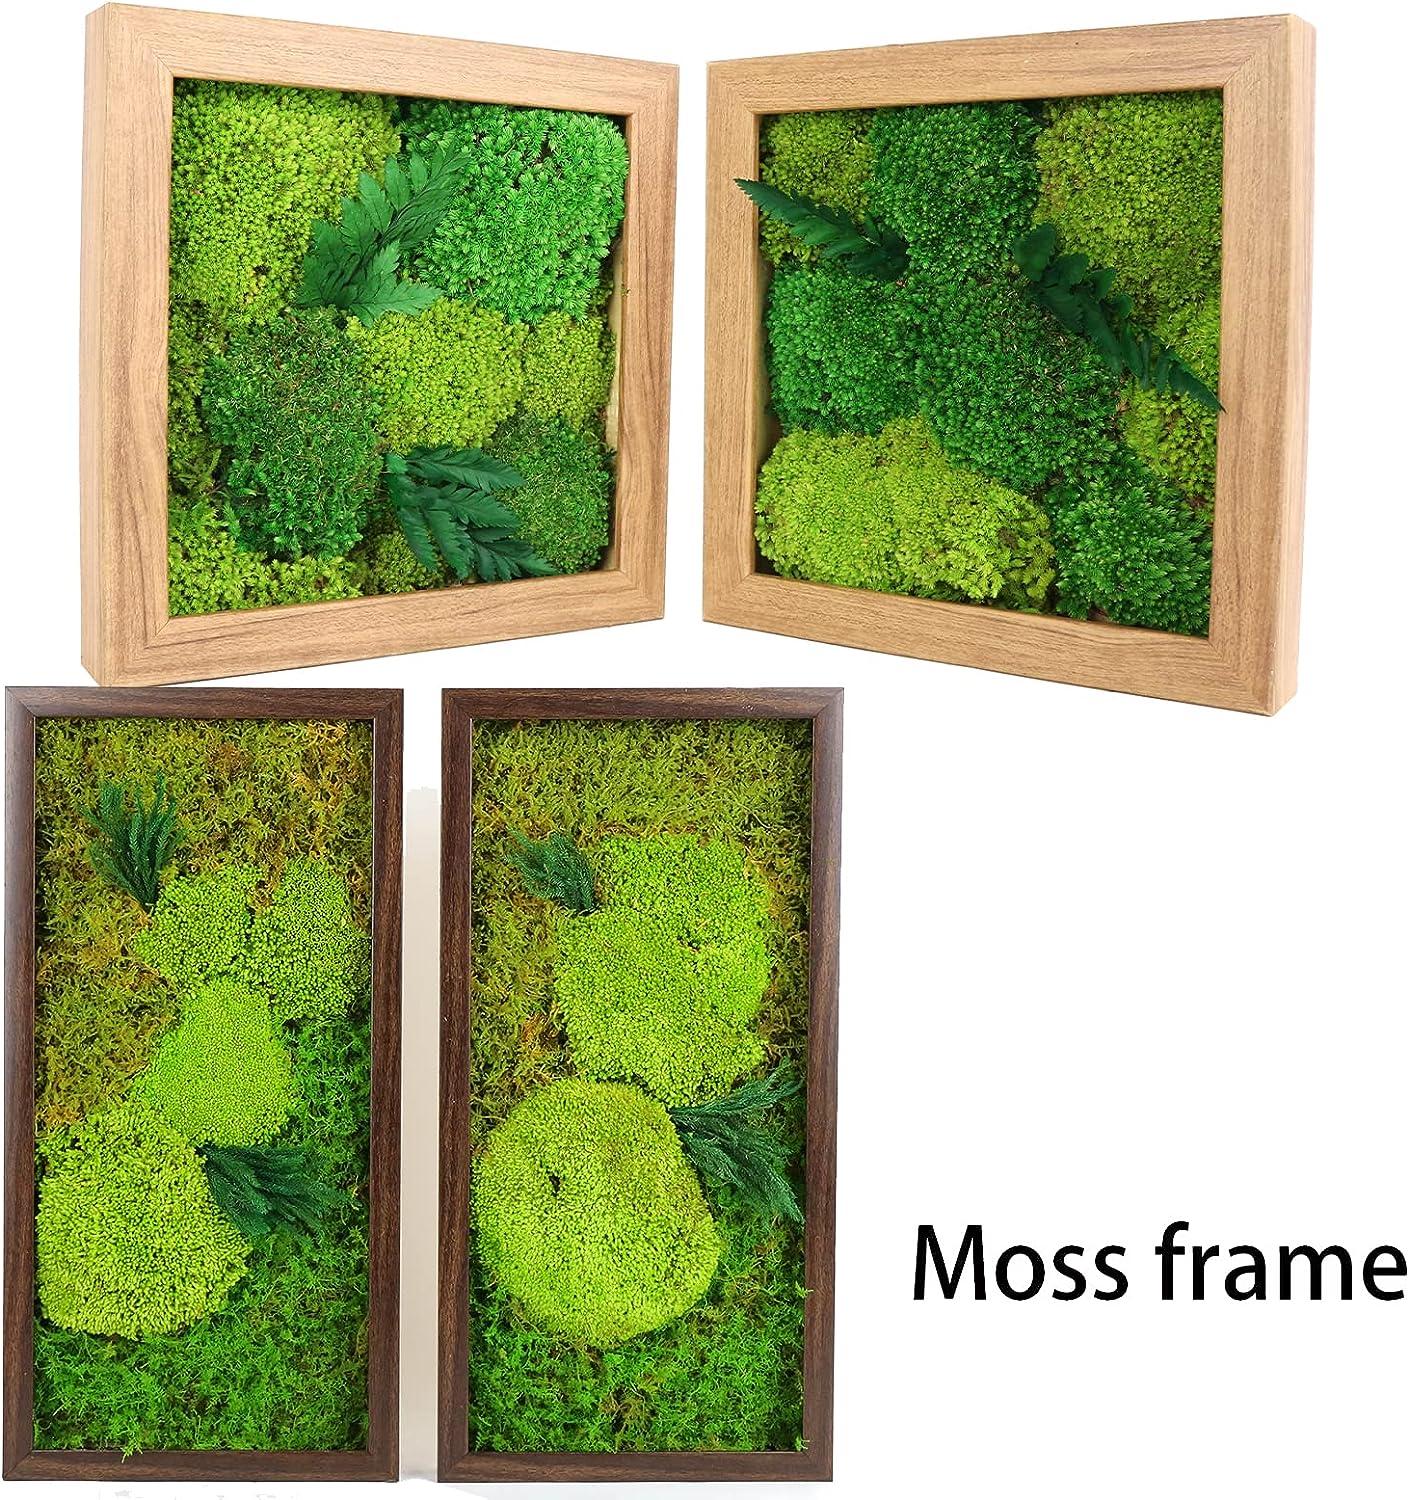 1.5sq. Ft Preserved Moss Pole Moss Pillow Moss Colored Decorative Moss for  Moss Crafts, Art DIY, Wall Decor (Yellow Green)